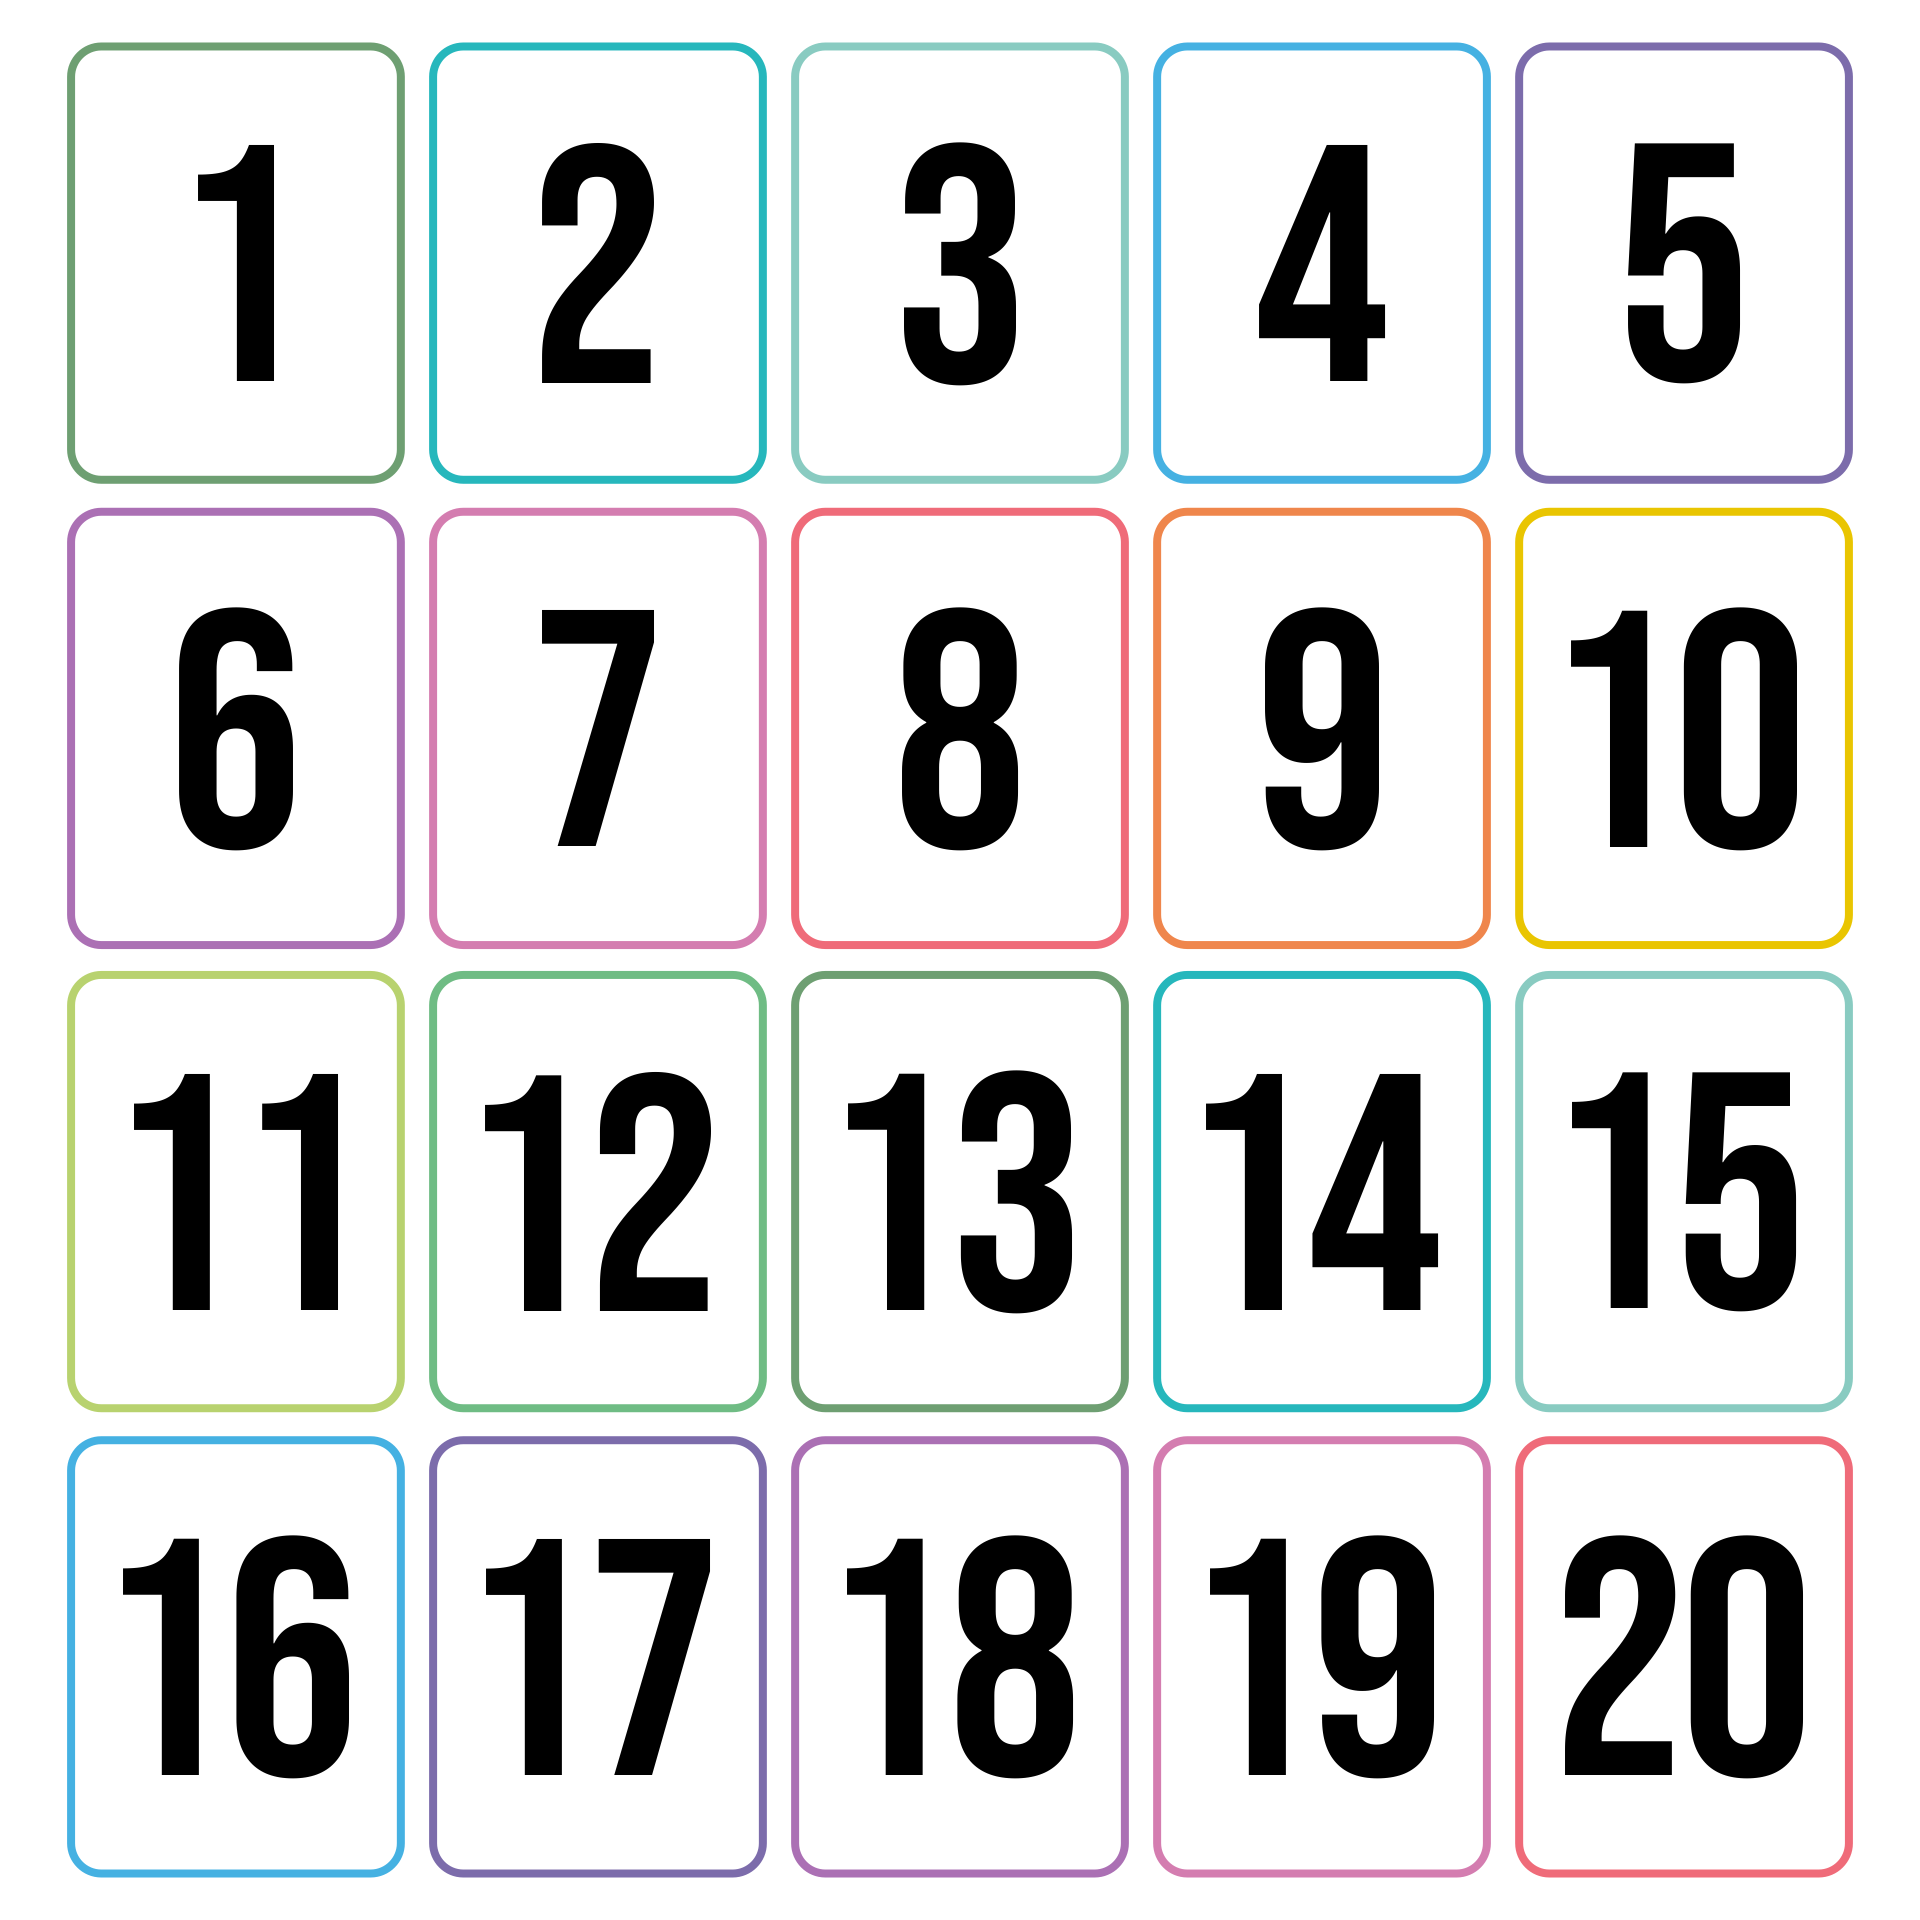 6 Best Images of Number Flashcards 1 30 Printable - Printable Number ...